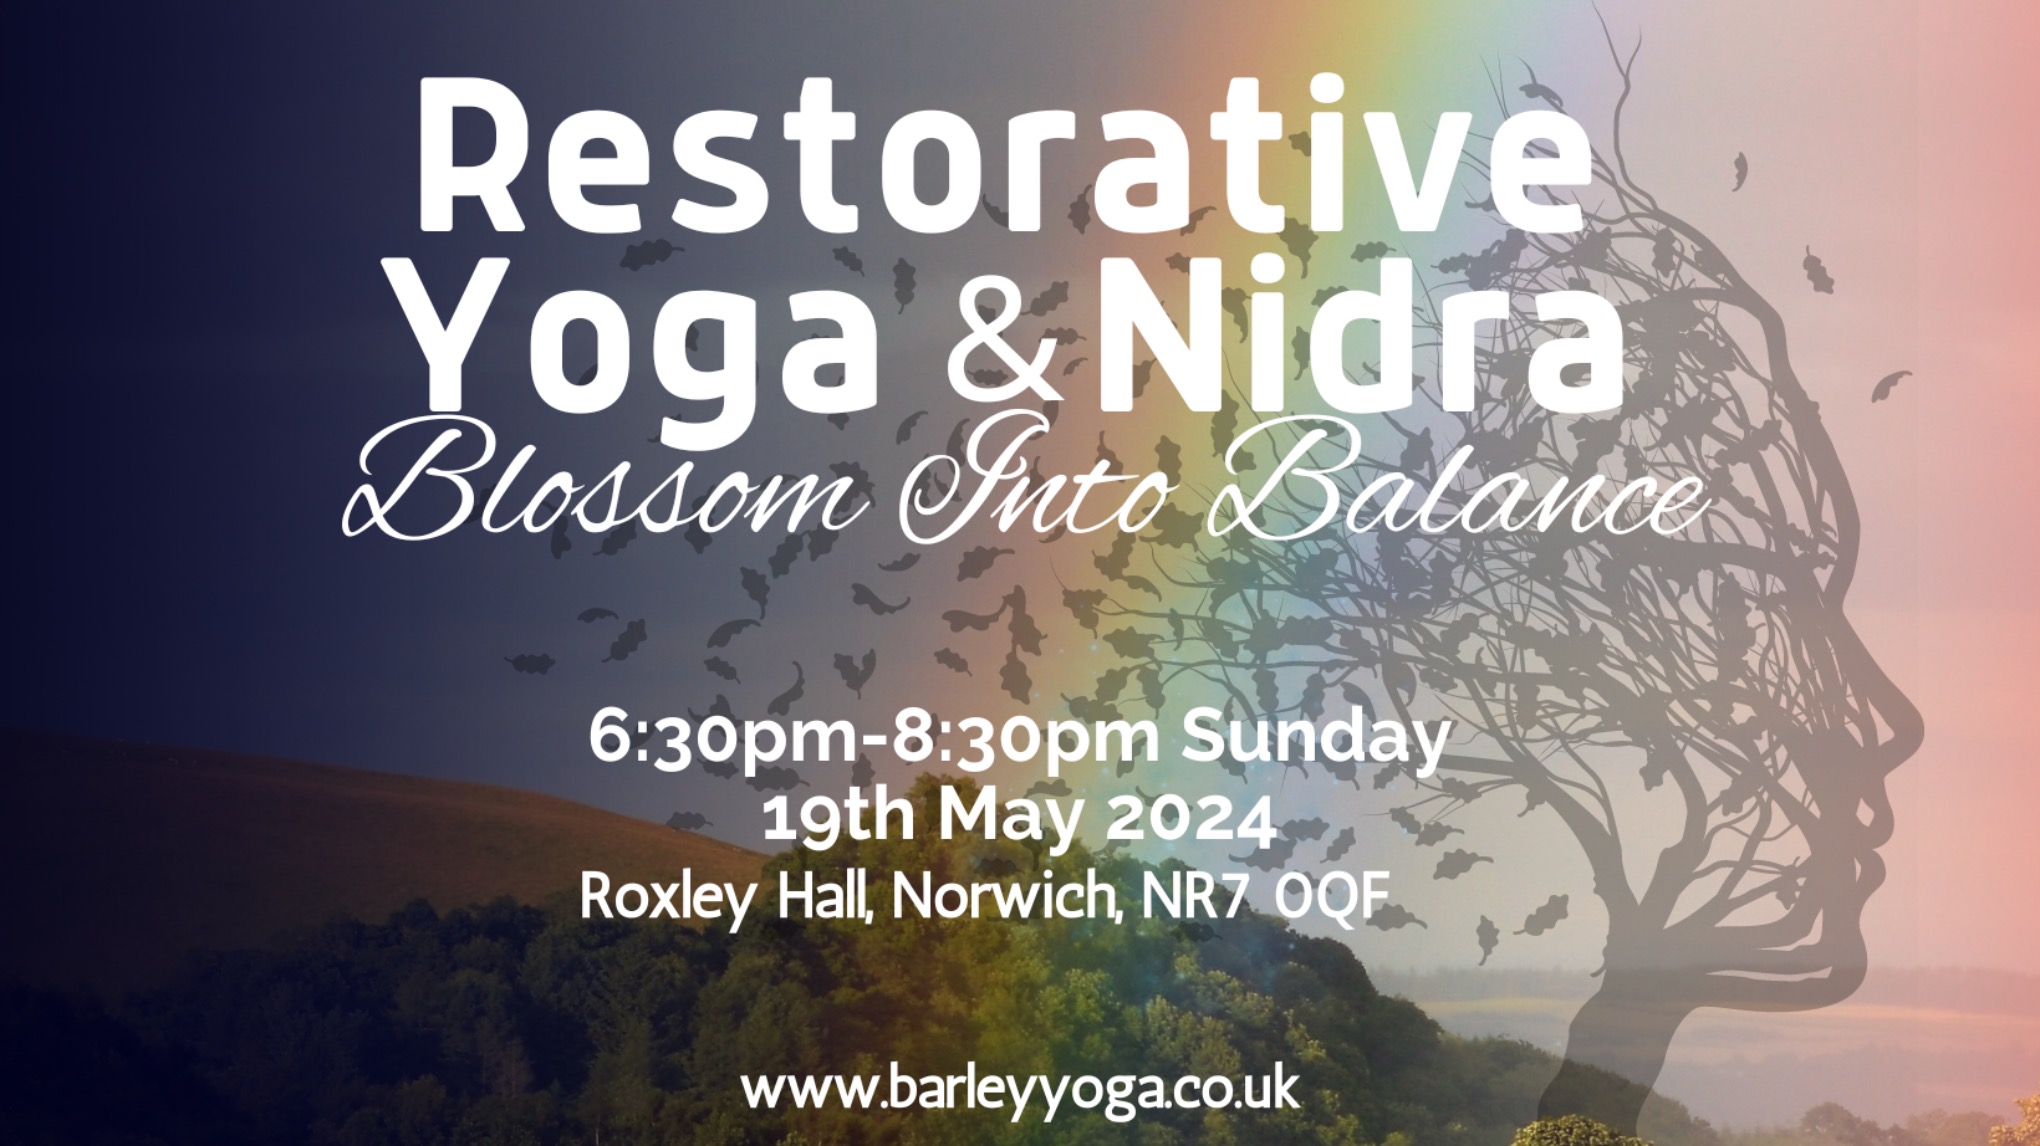 Sunday Evening Retreat / Blossom into Balance /Restorative Yoga and Nidra